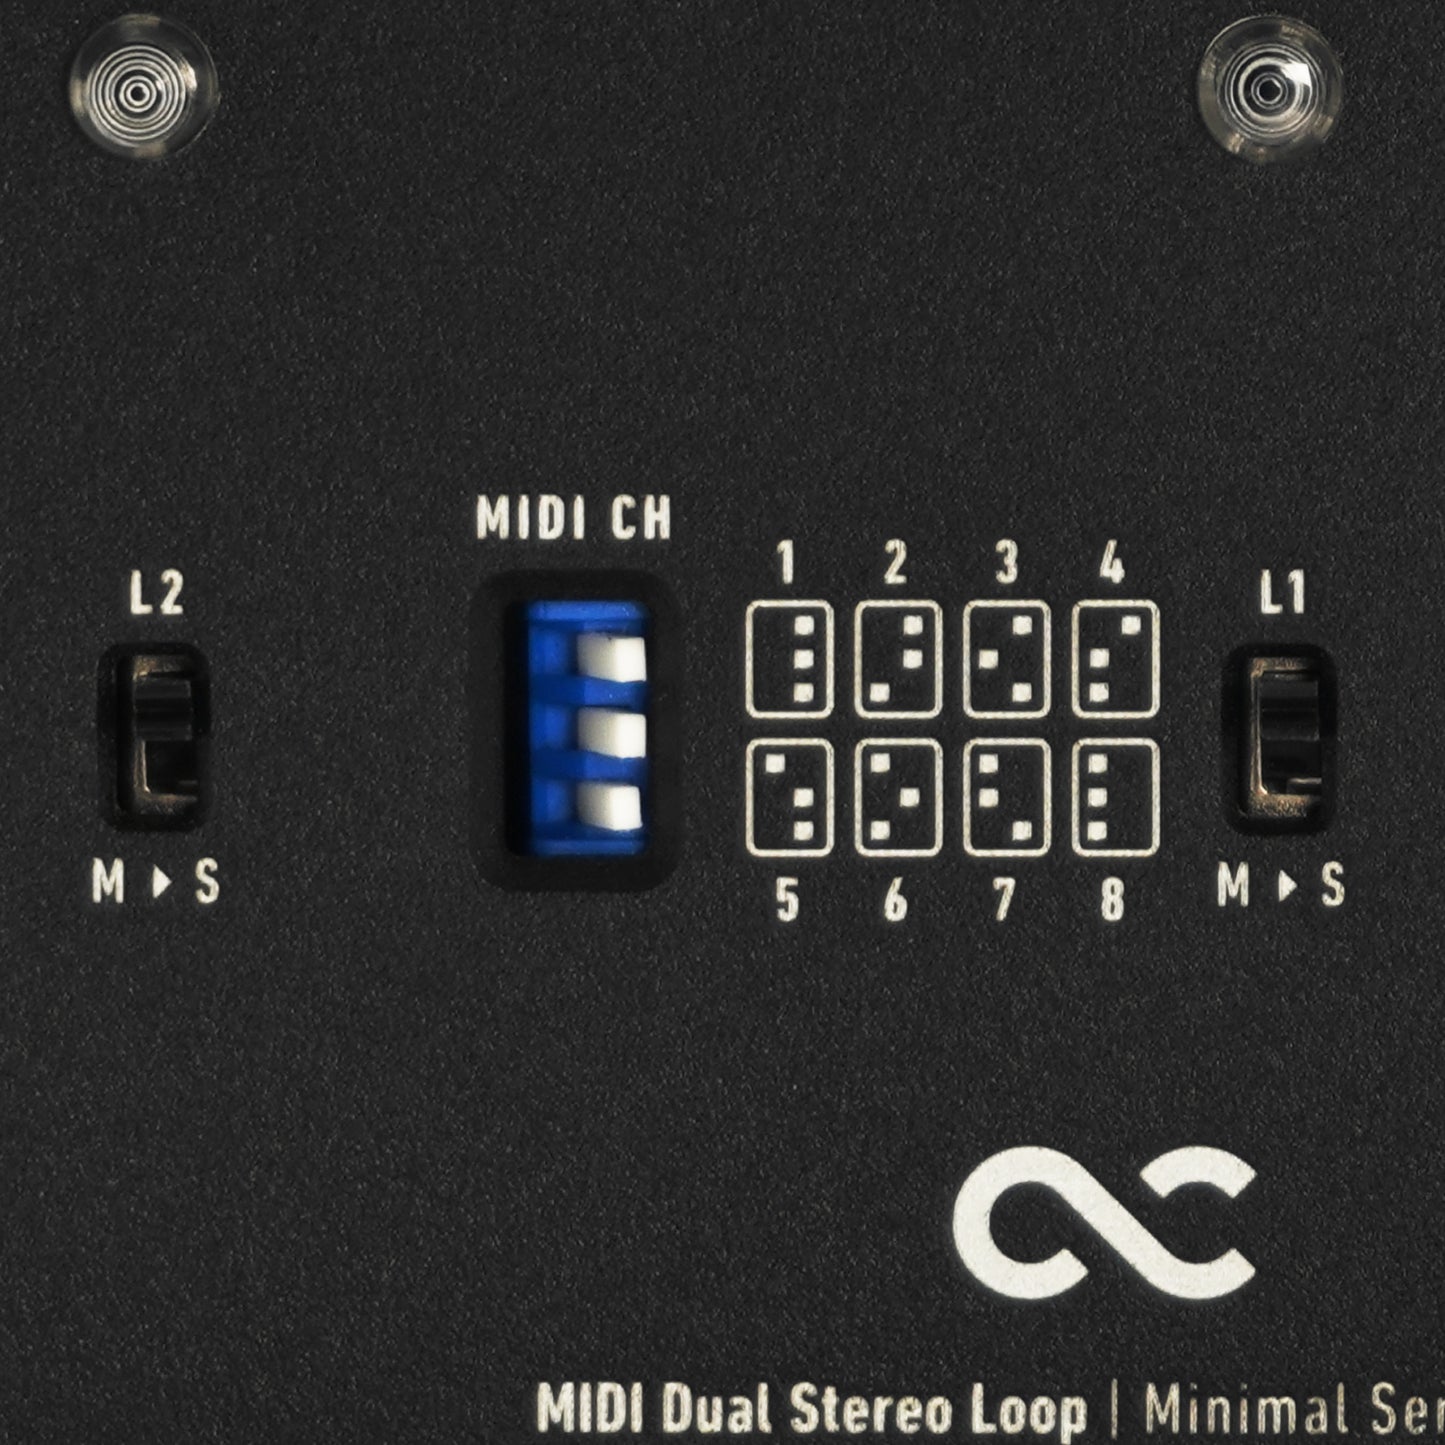 One Control Minimal Series MIDI Dual Stereo Loop